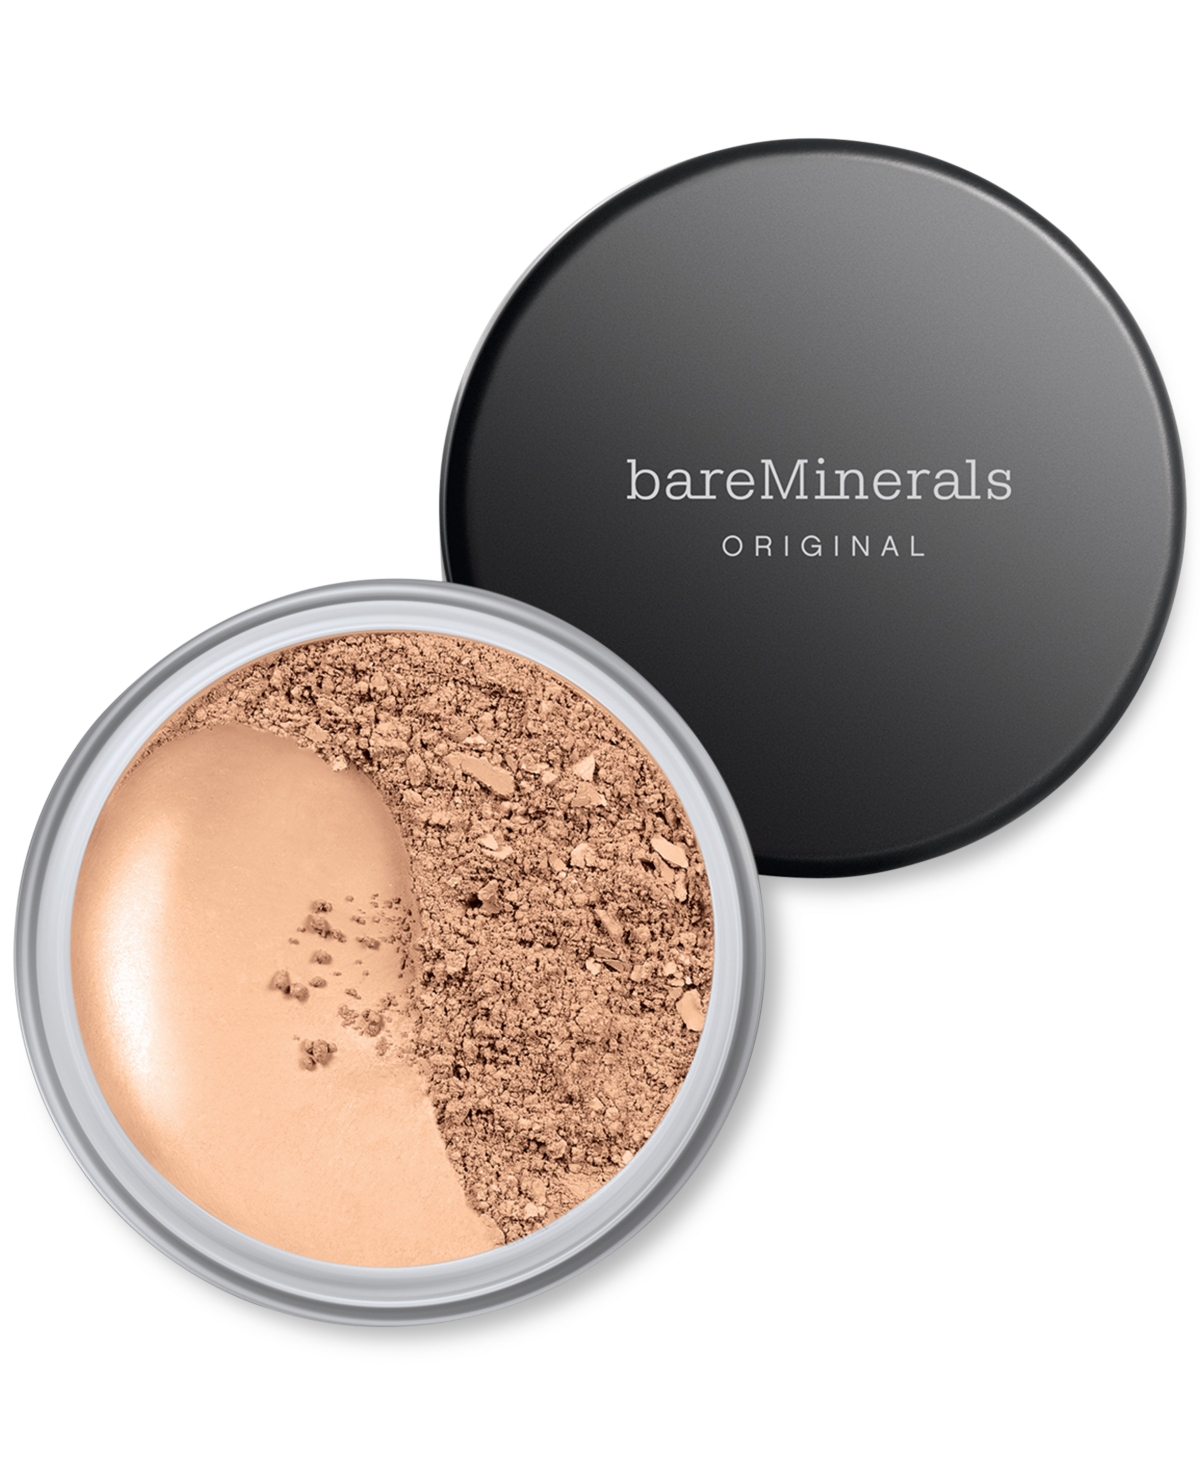 bareMinerals Original Loose Powder Foundation Spf 15 - Medium Beige - for light to medium skin